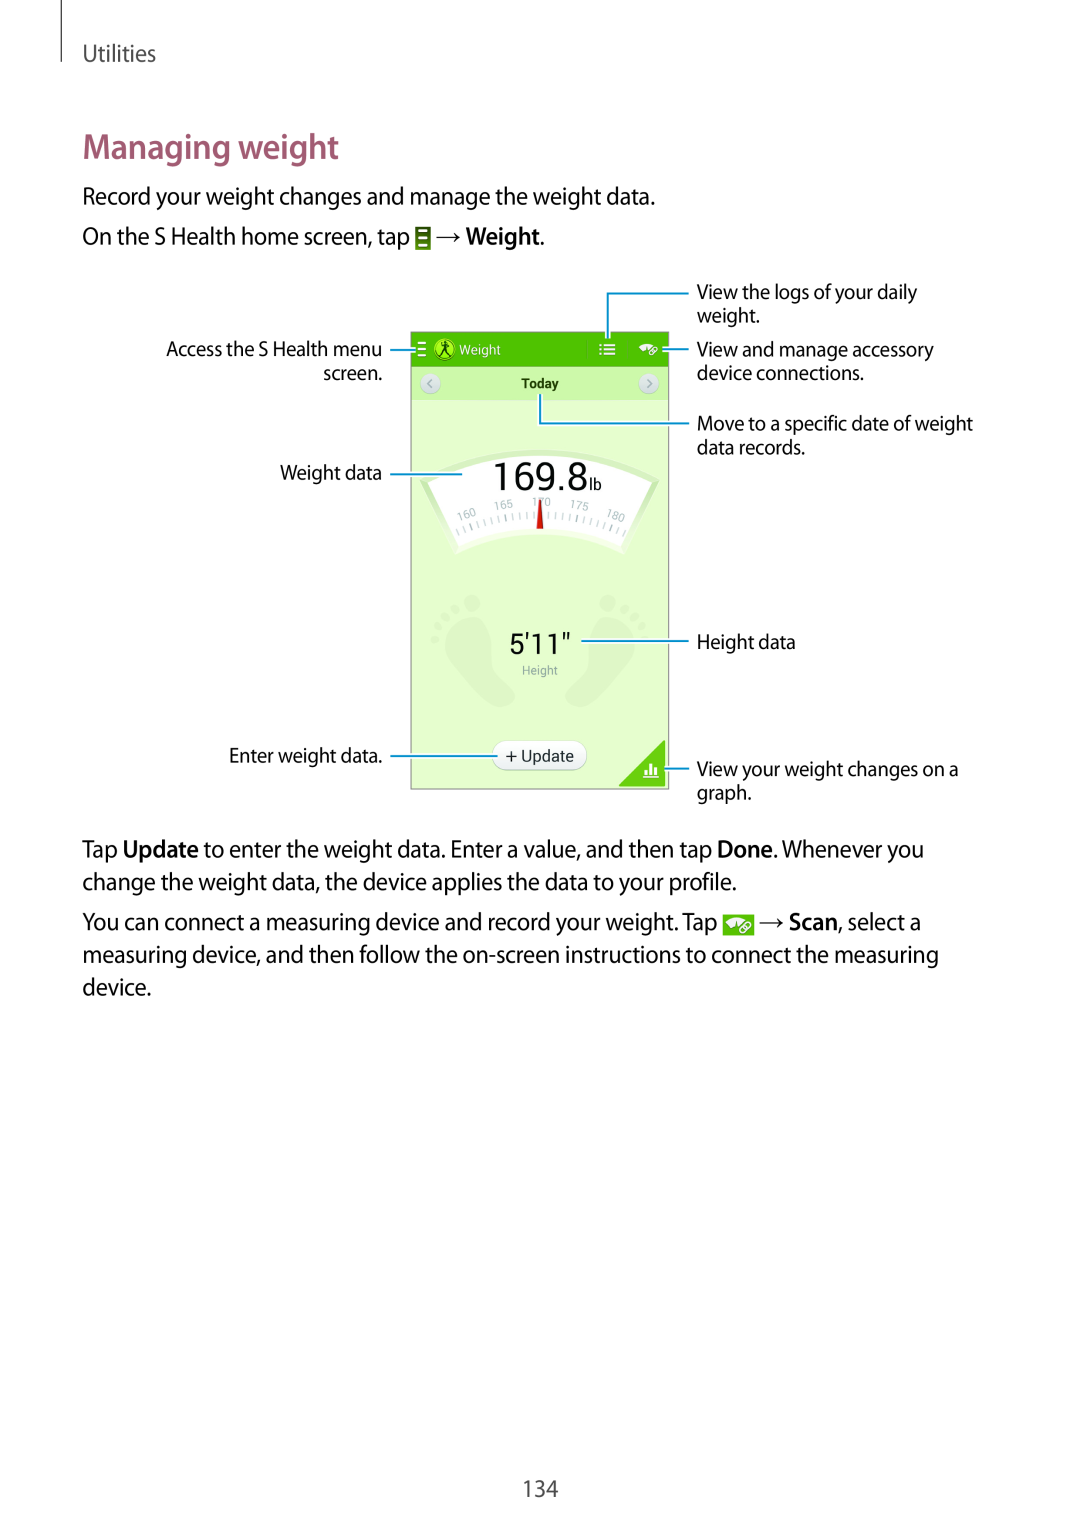 Samsung SM-N9005ZKEKSA manual Managing weight, Utilities, Access the S Health menu screen Weight data Enter weight data 